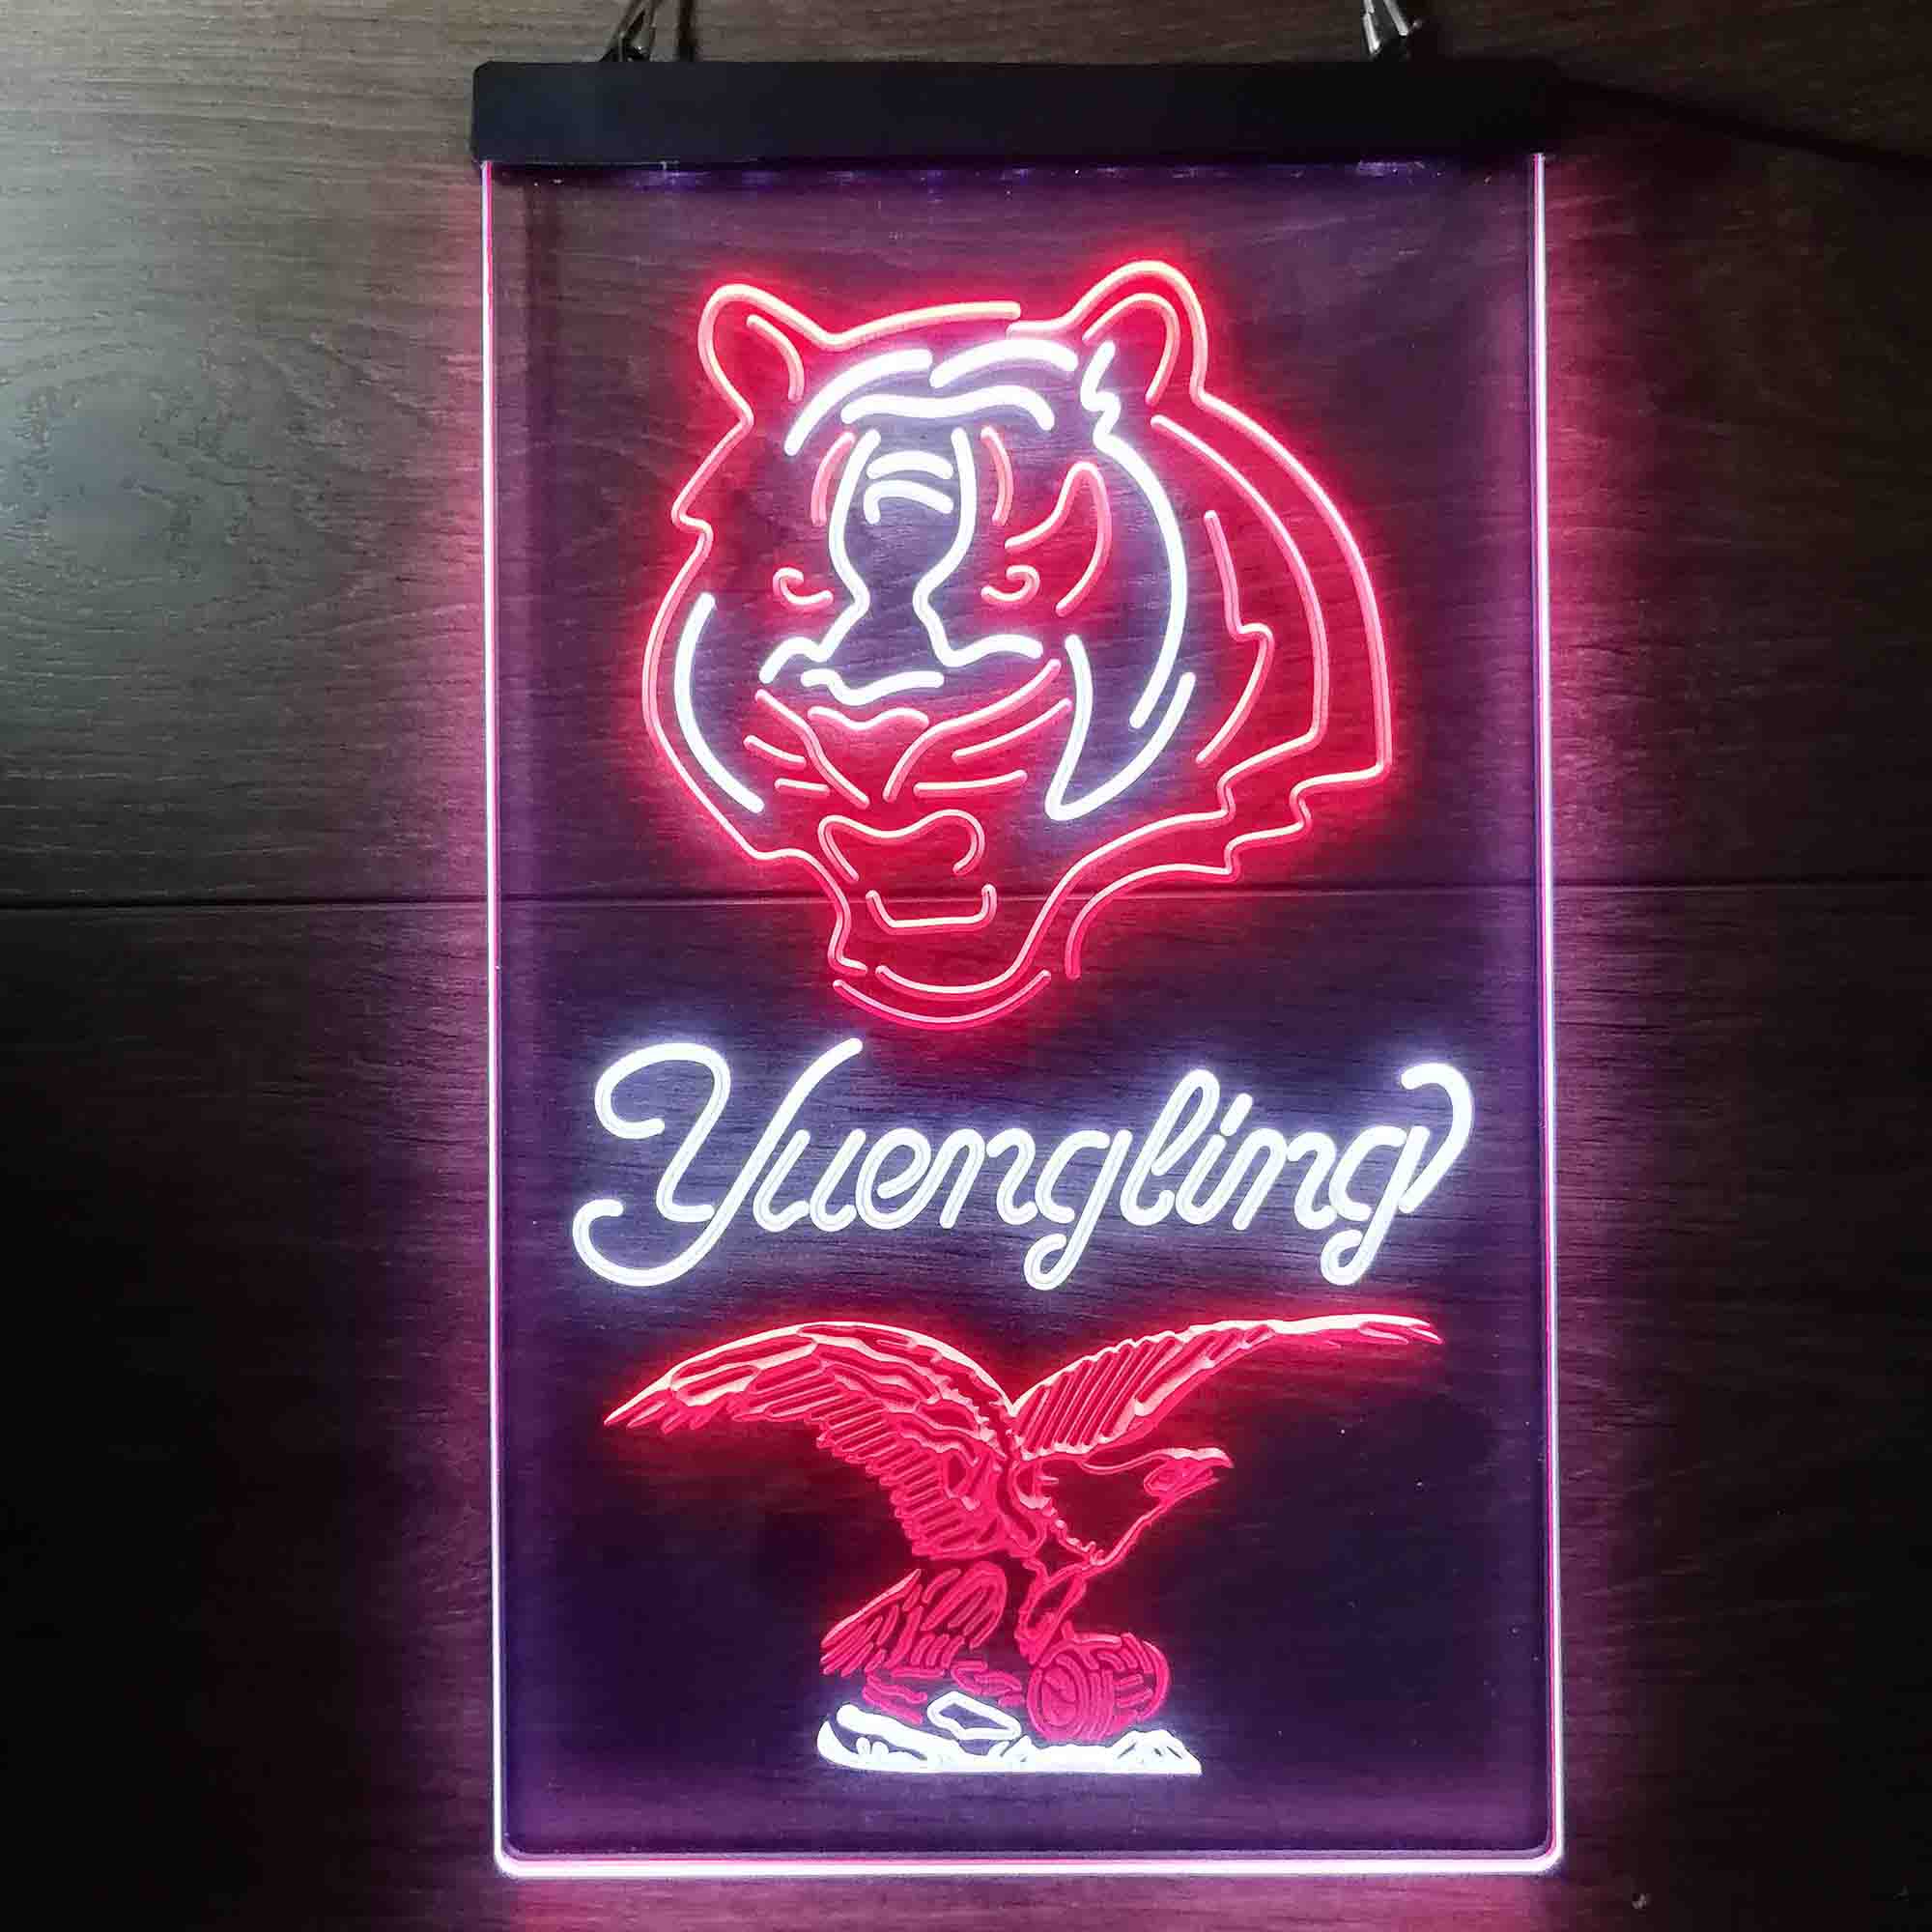 Yuengling Bar Cincinnati Bengals Est. 1968 Neon-Like LED Sign